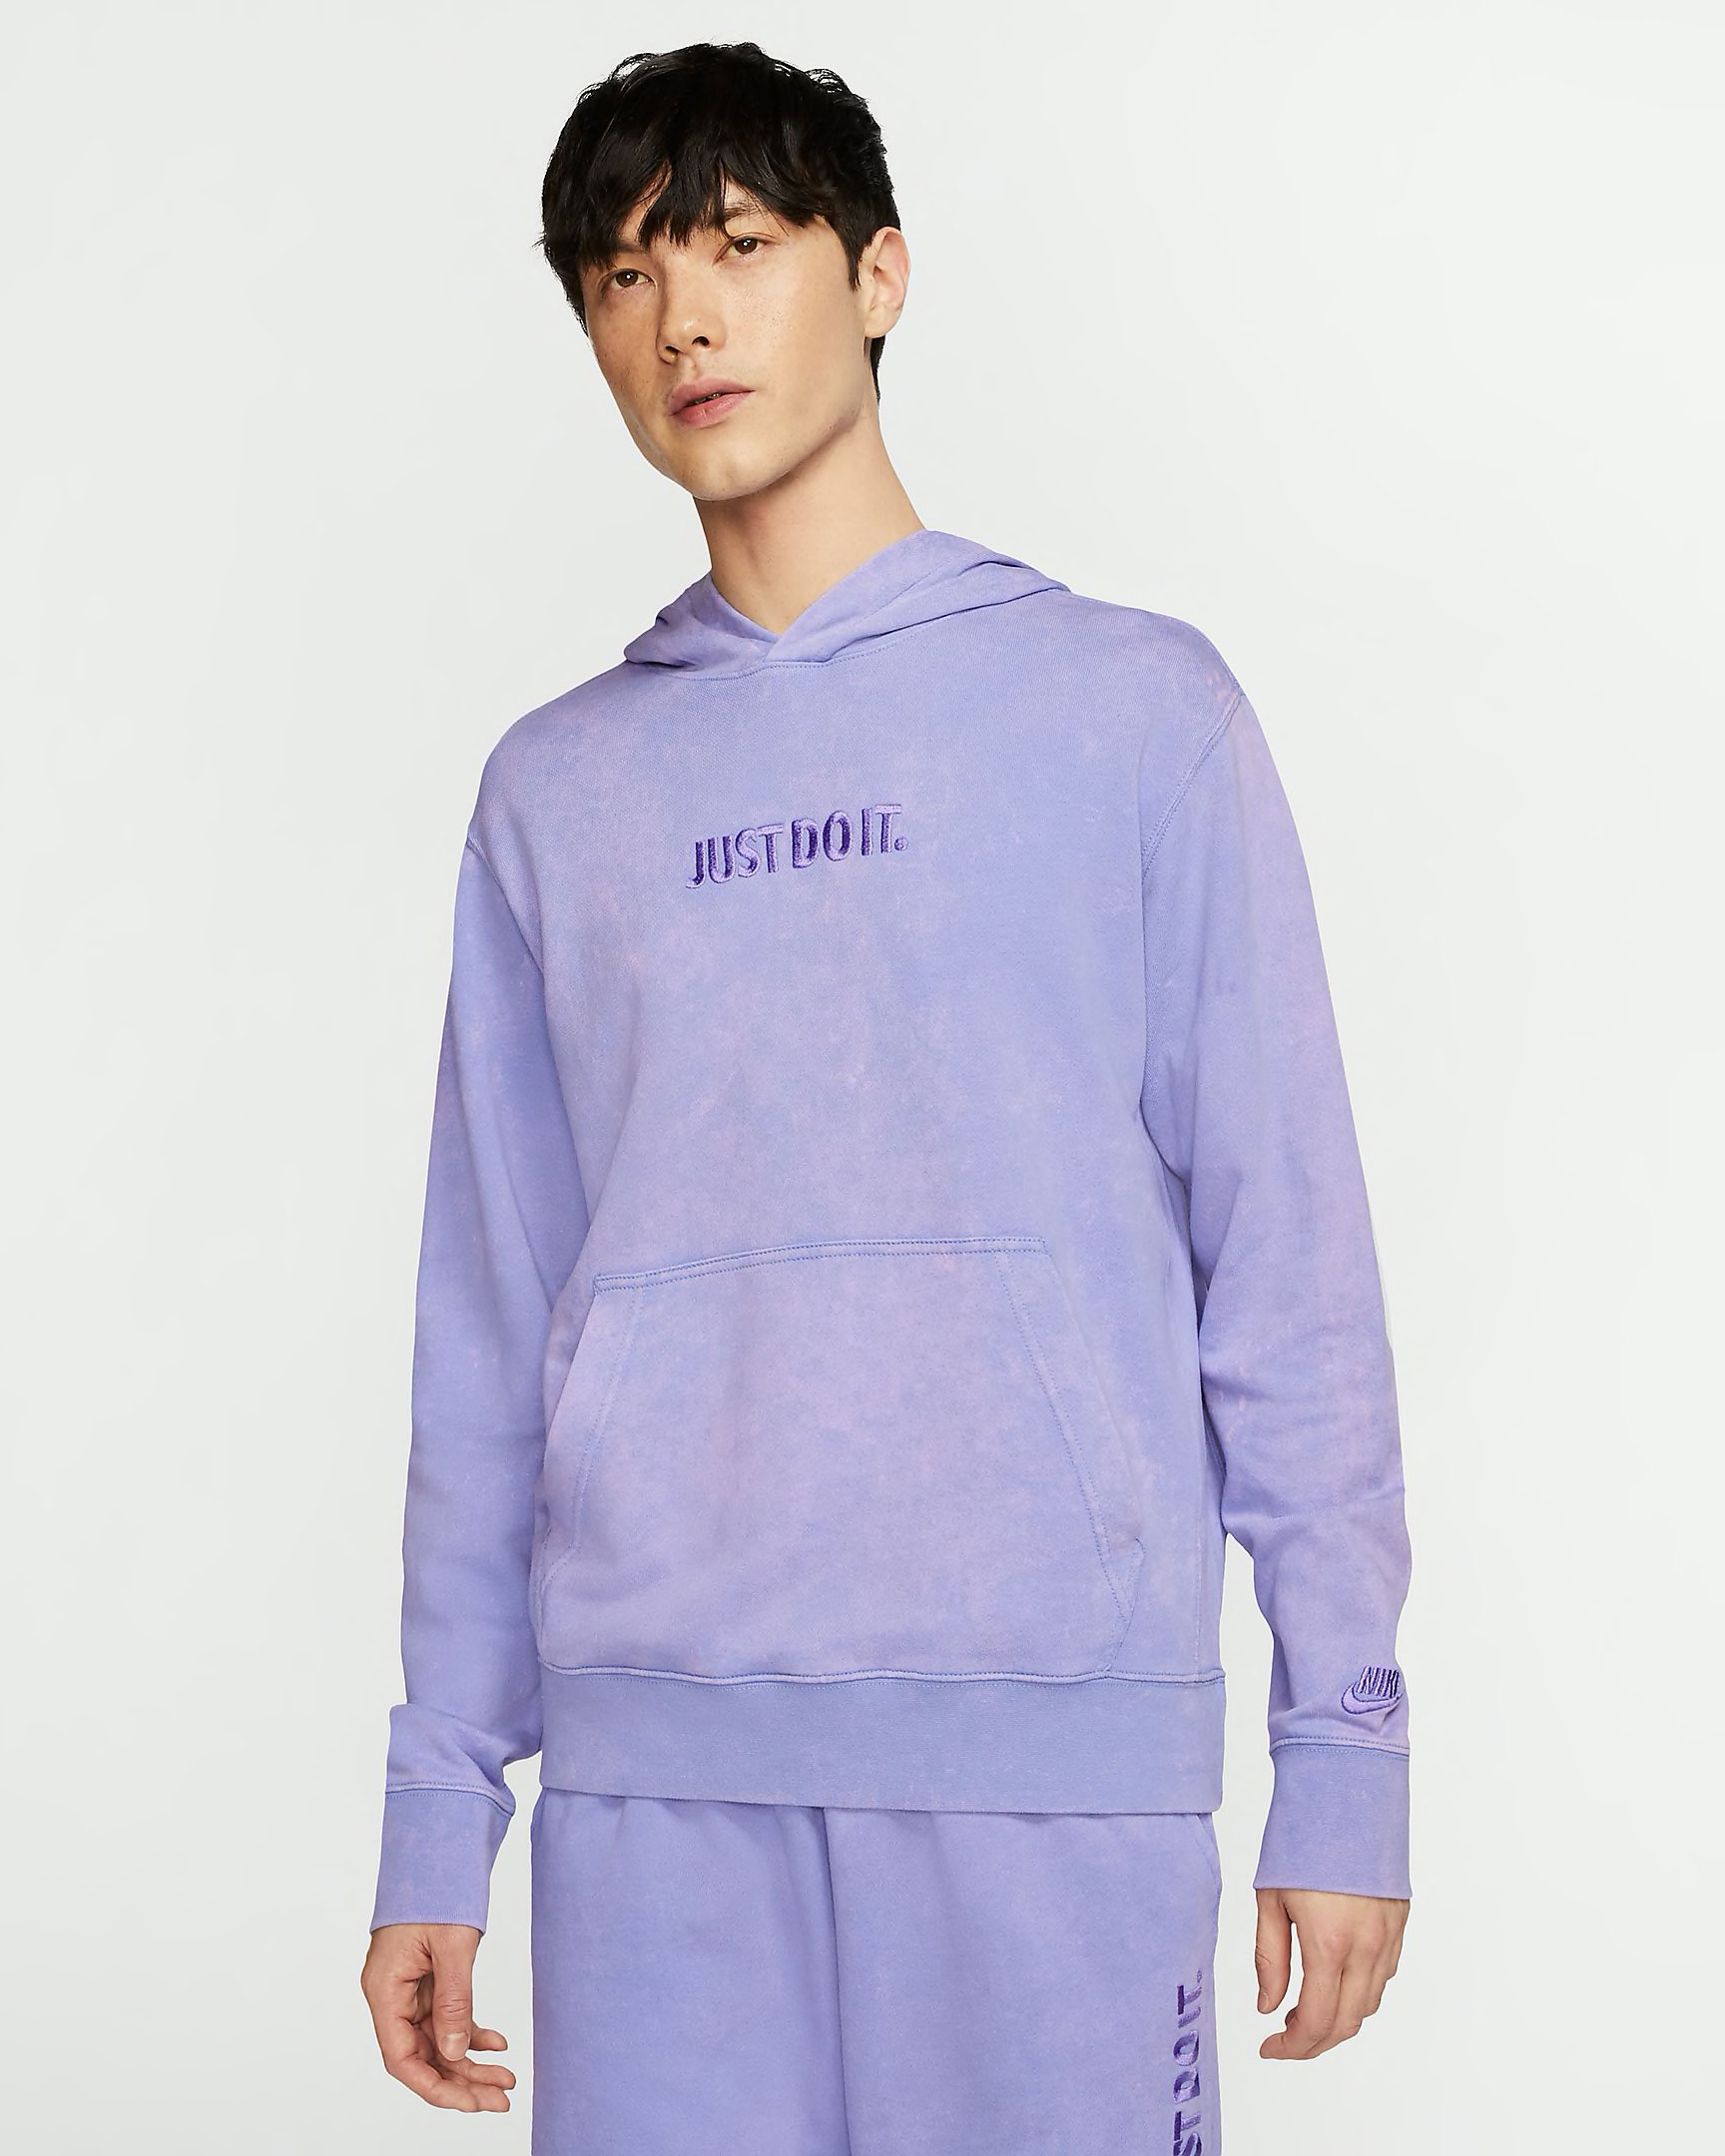 nike-jdi-just-do-it-hoodie-purple